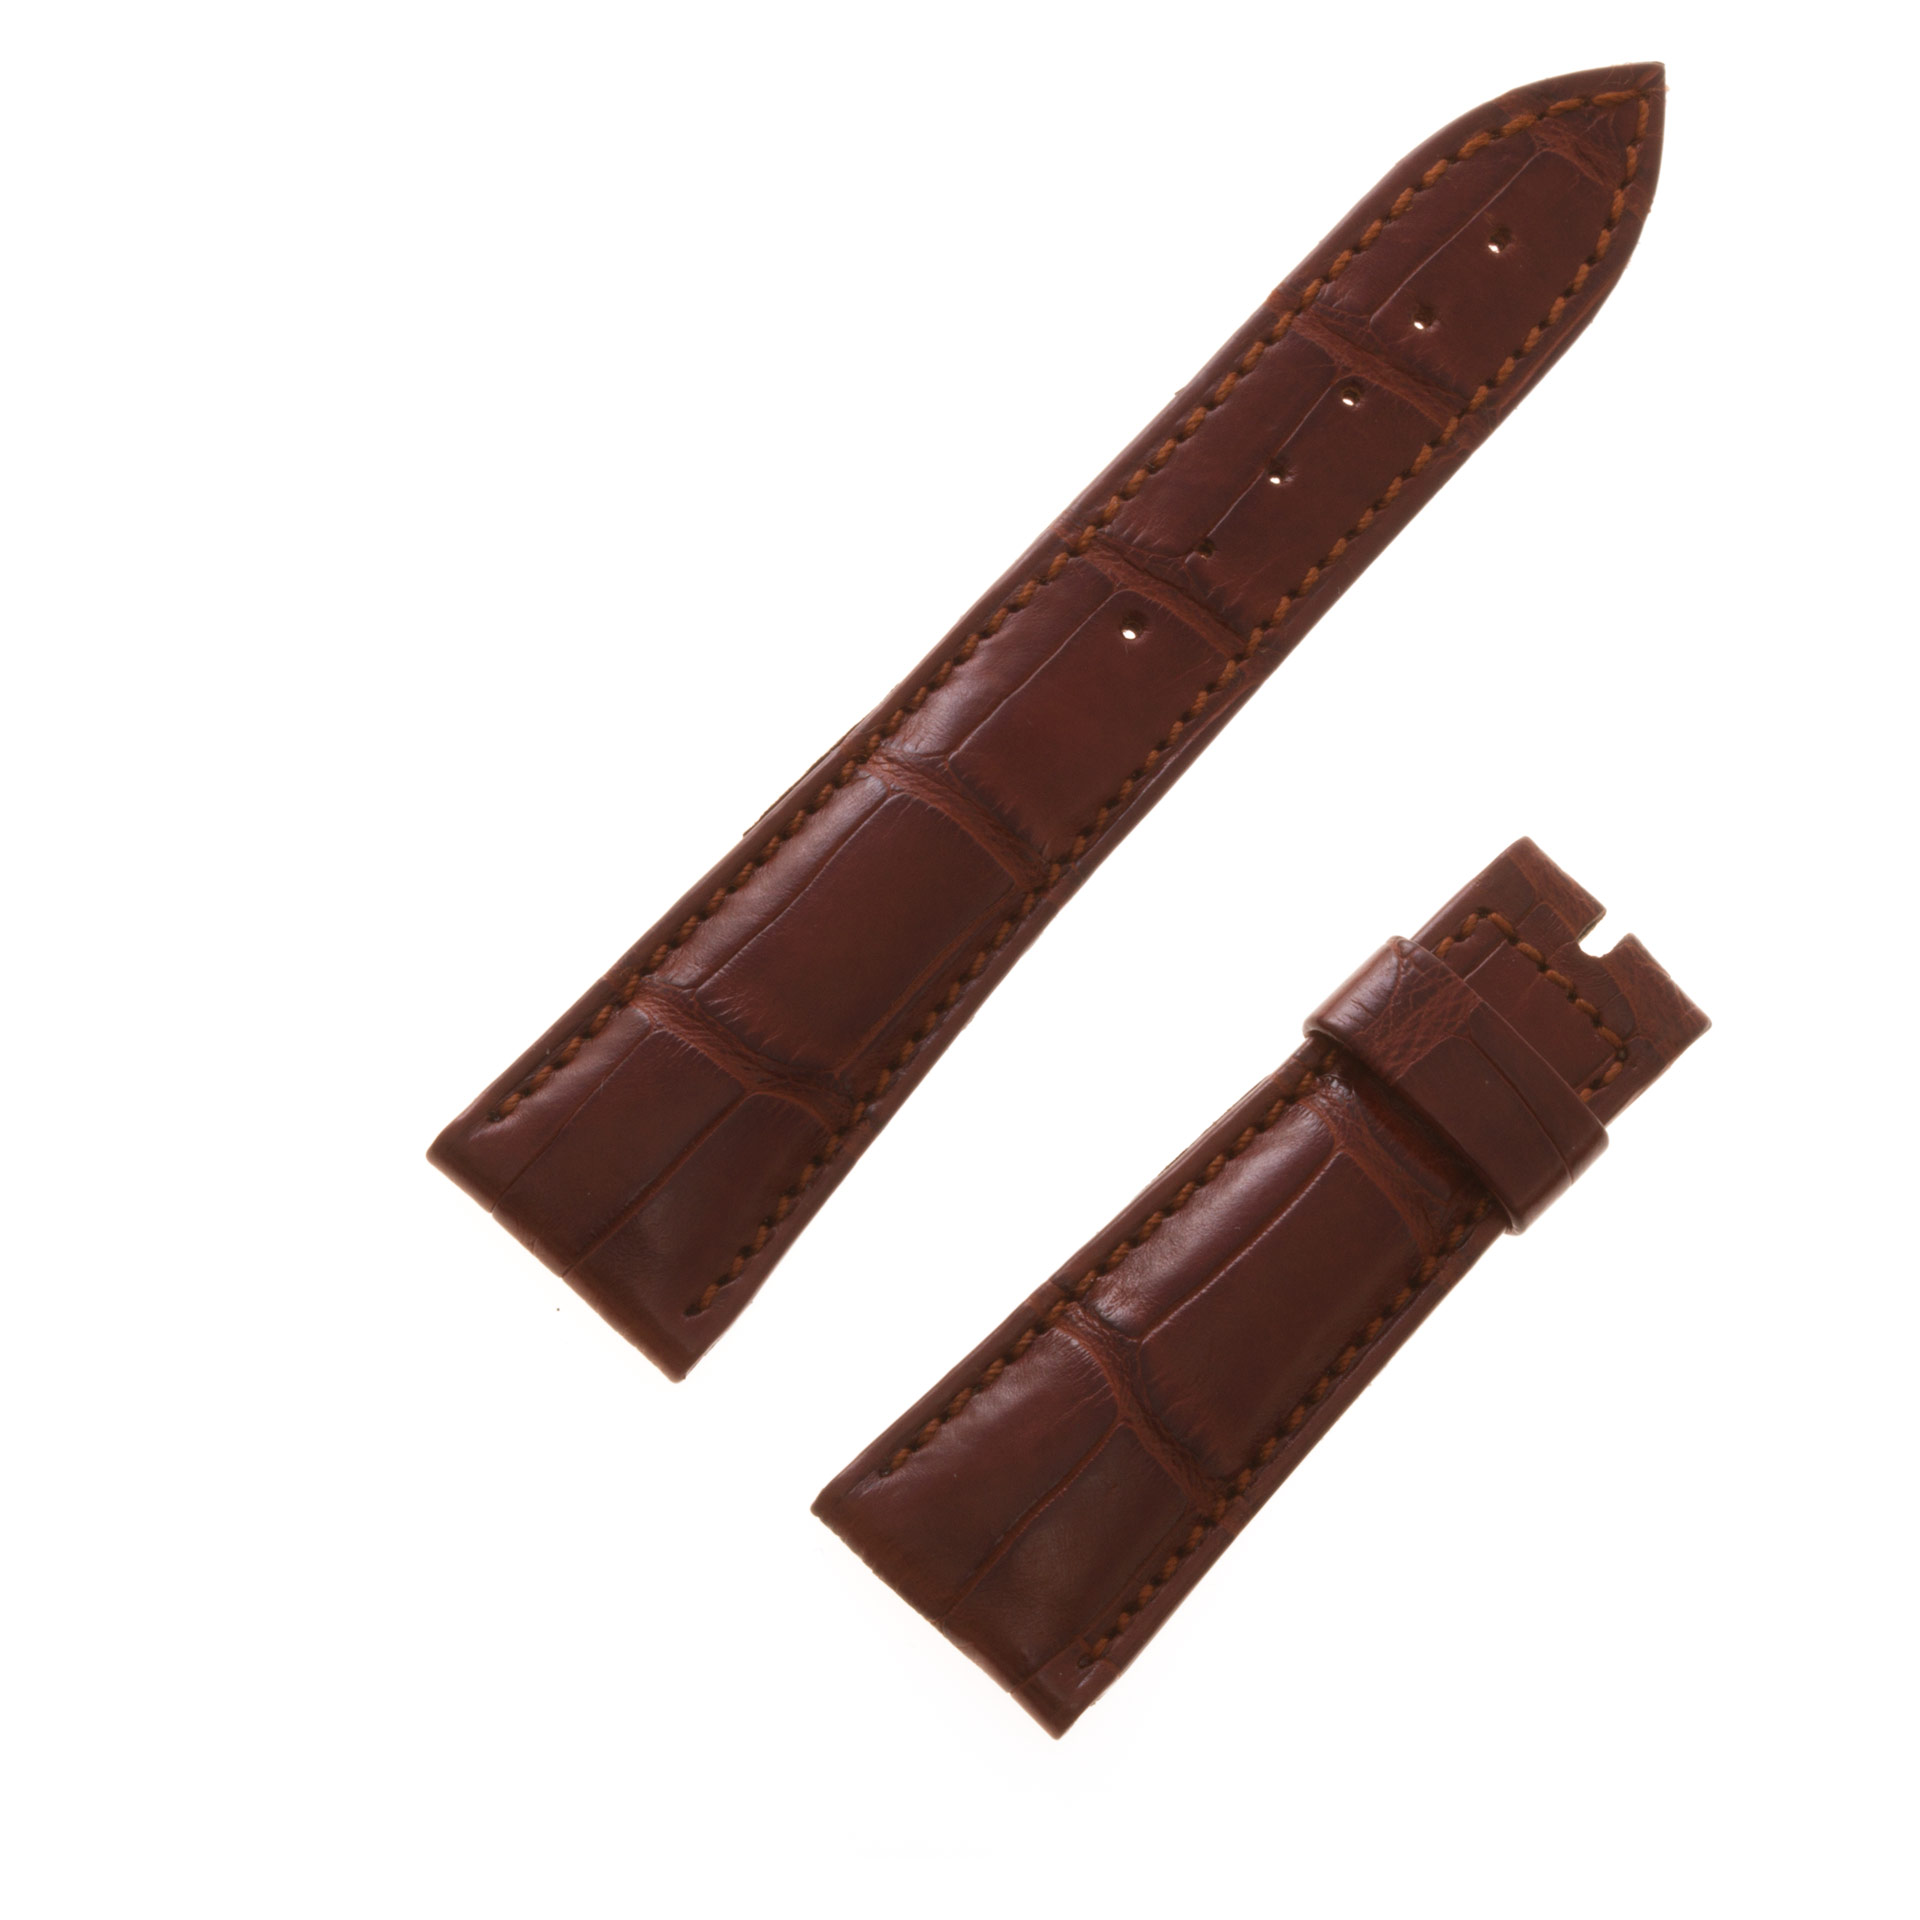 Orginal Breguet dark brown alligator strap (20mm x 16mm)